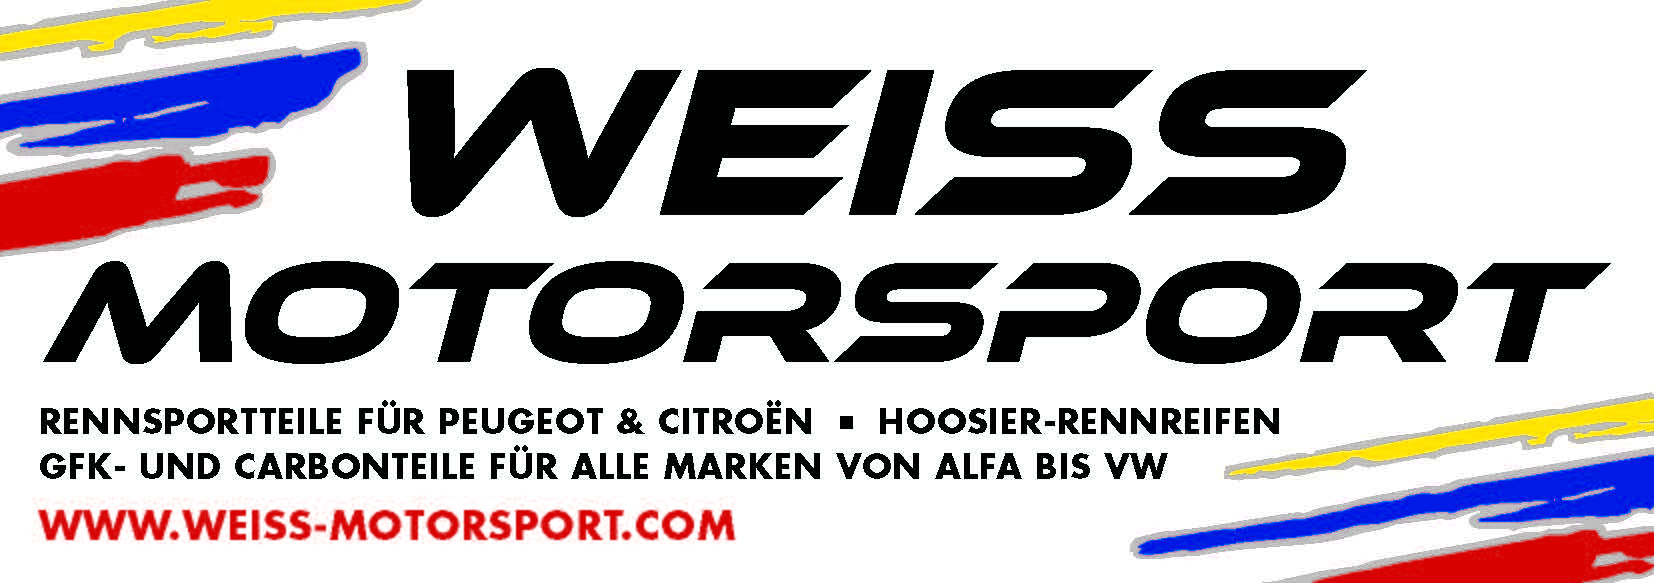 Weiss Motorsport